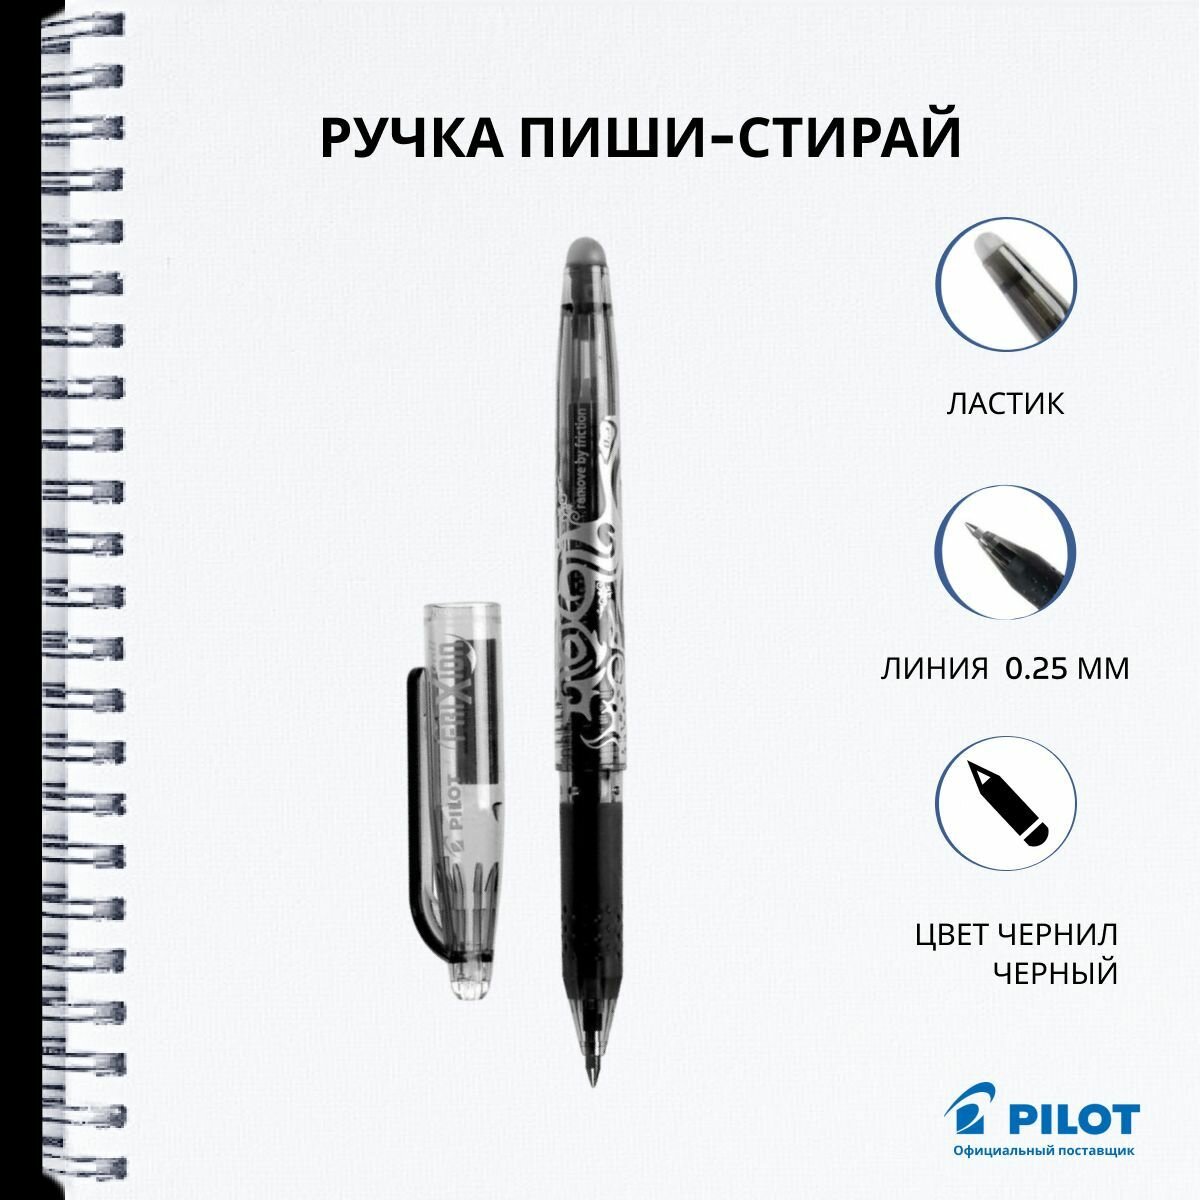 Ручка гелевая пиши-стирай Pilot, черная, линия 0.25 мм